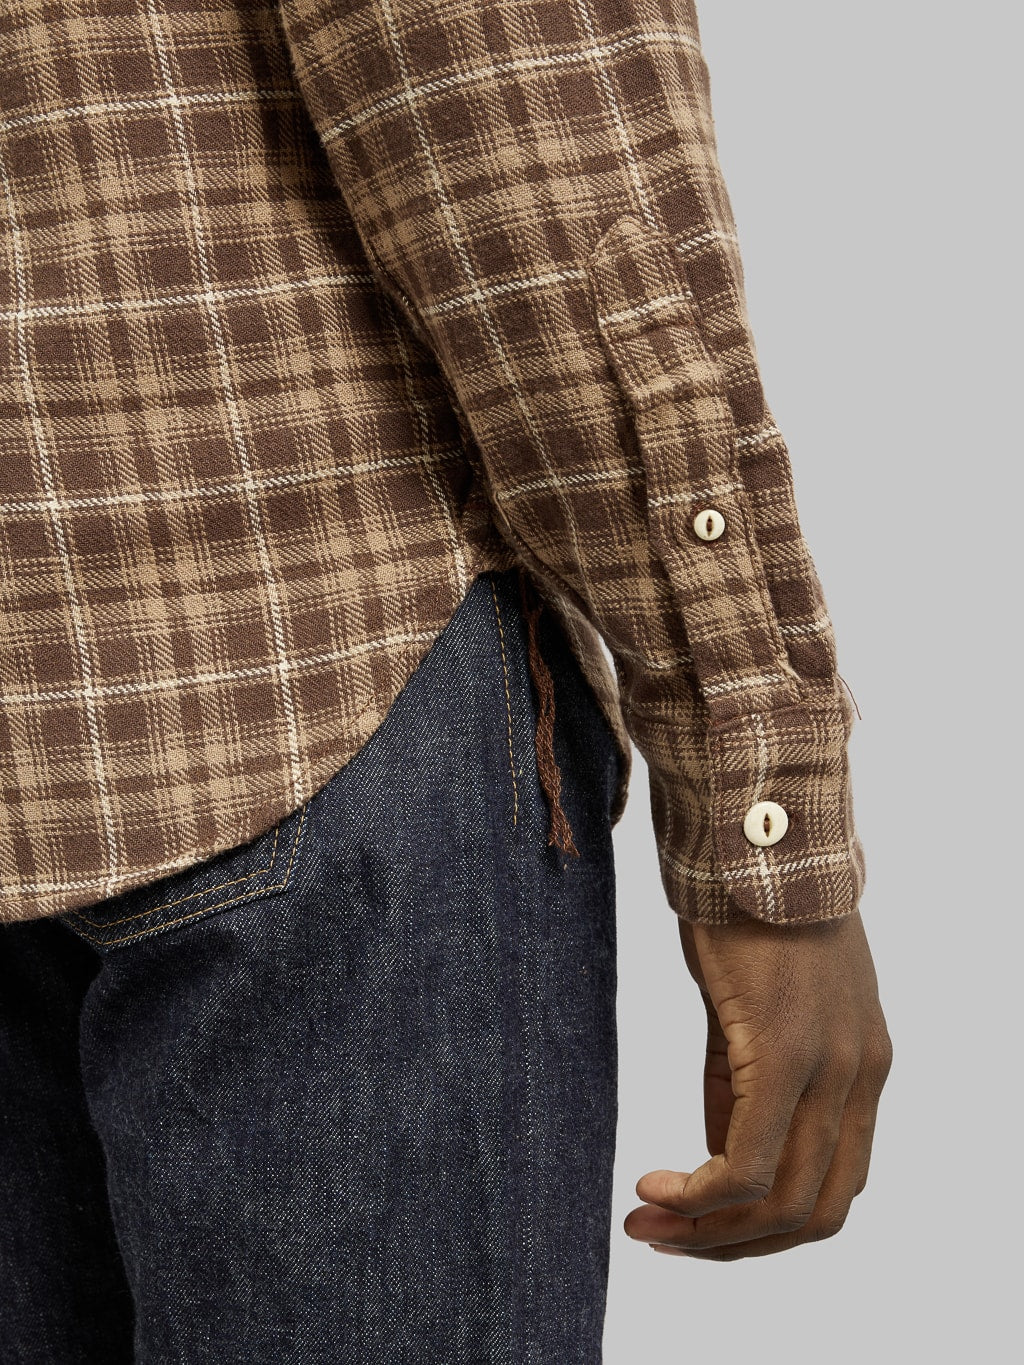 Freenote Cloth Wells Shirt Brown cuff details